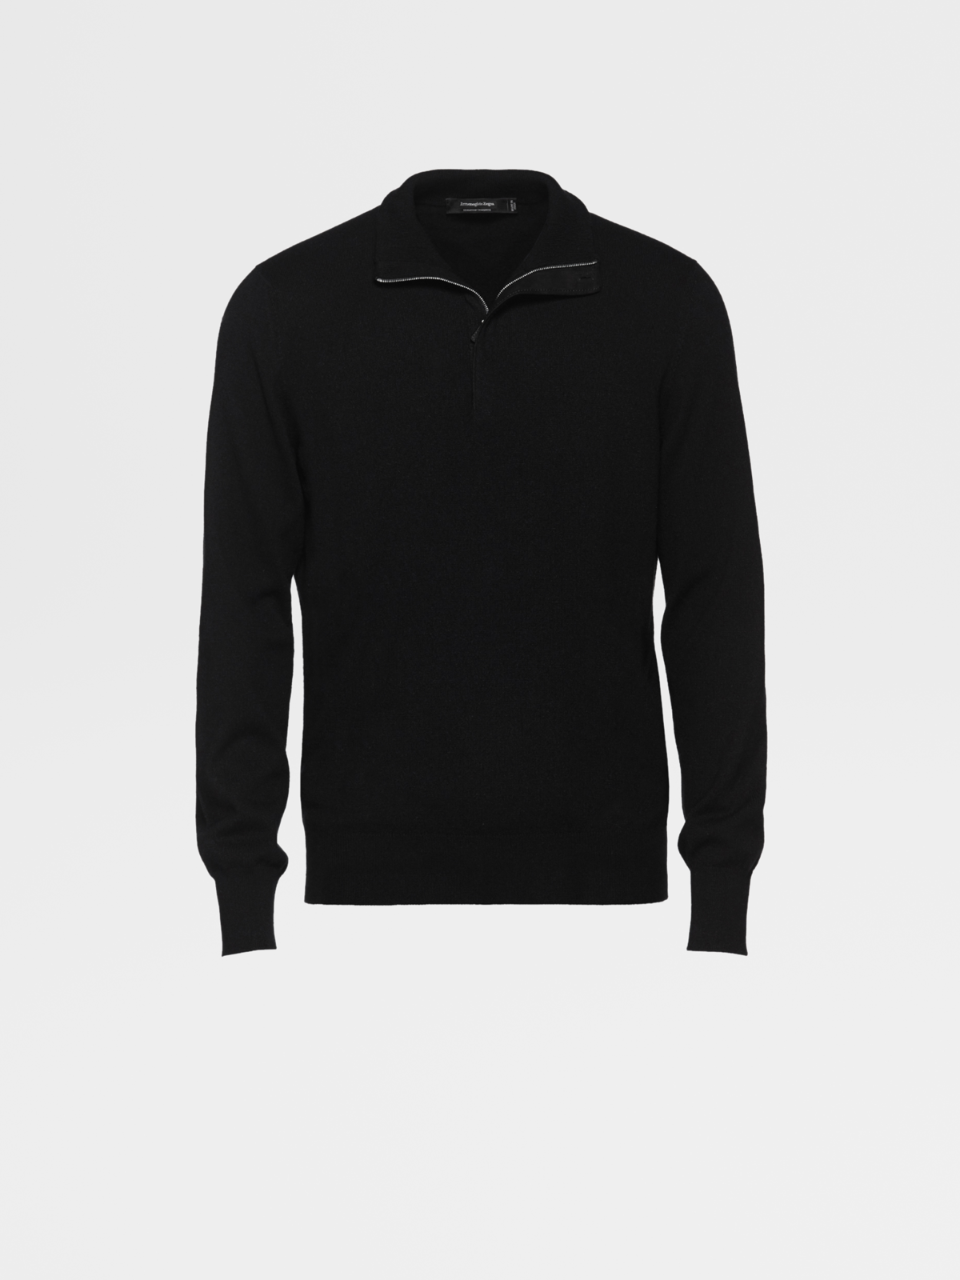 Jersey de Cuello de Chimenea en Punto de Premium Cashmere de color Negro